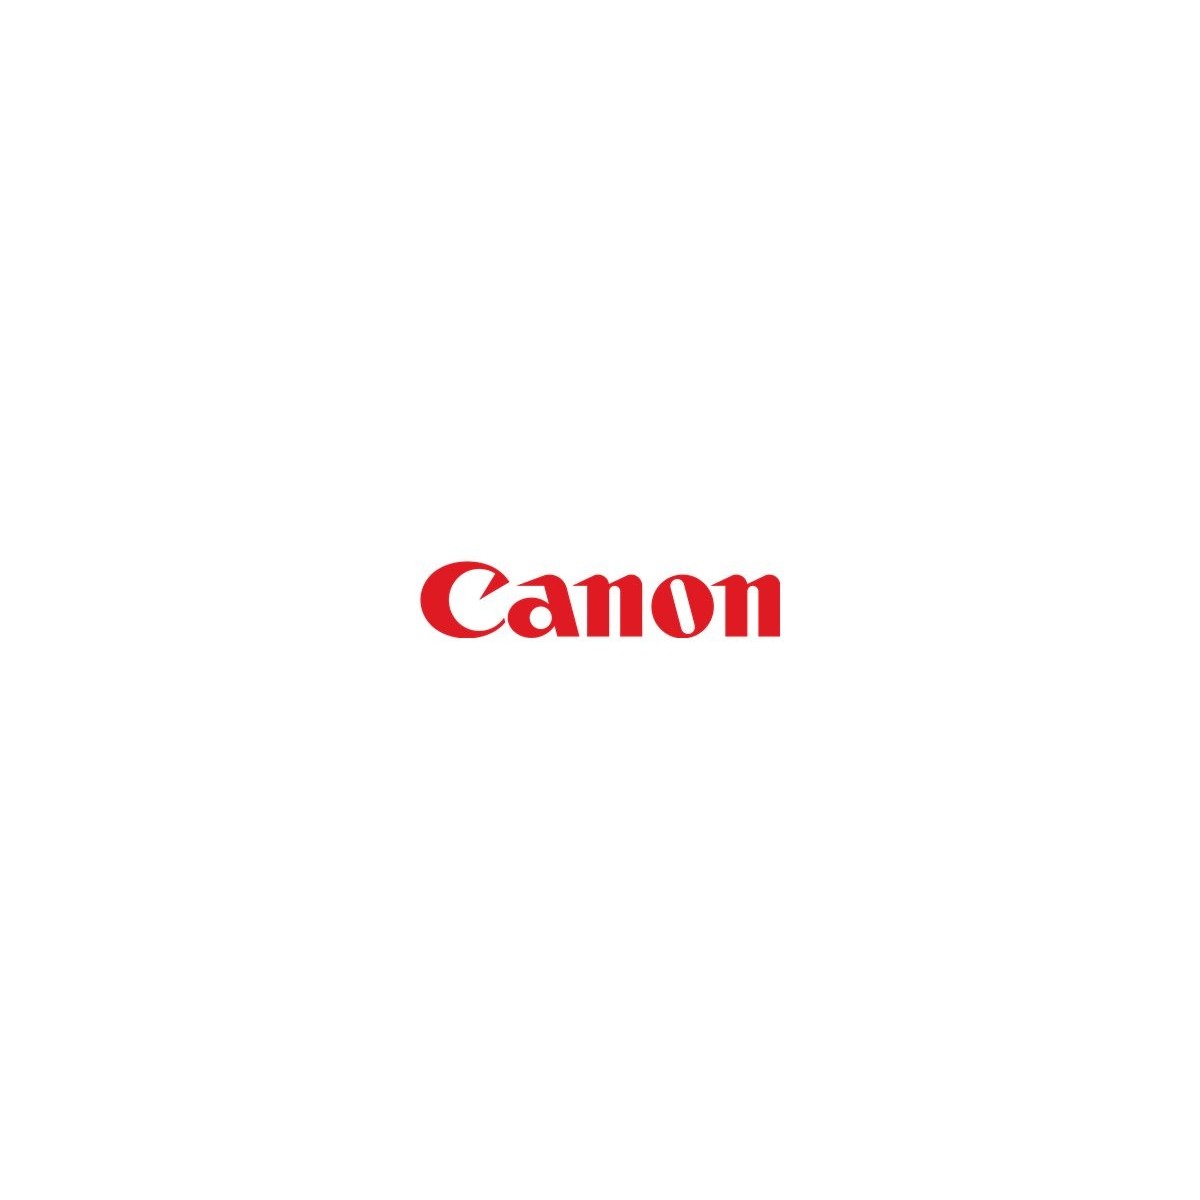 Canon RM2-6454-000 - Transfer belt - 1 pc(s)